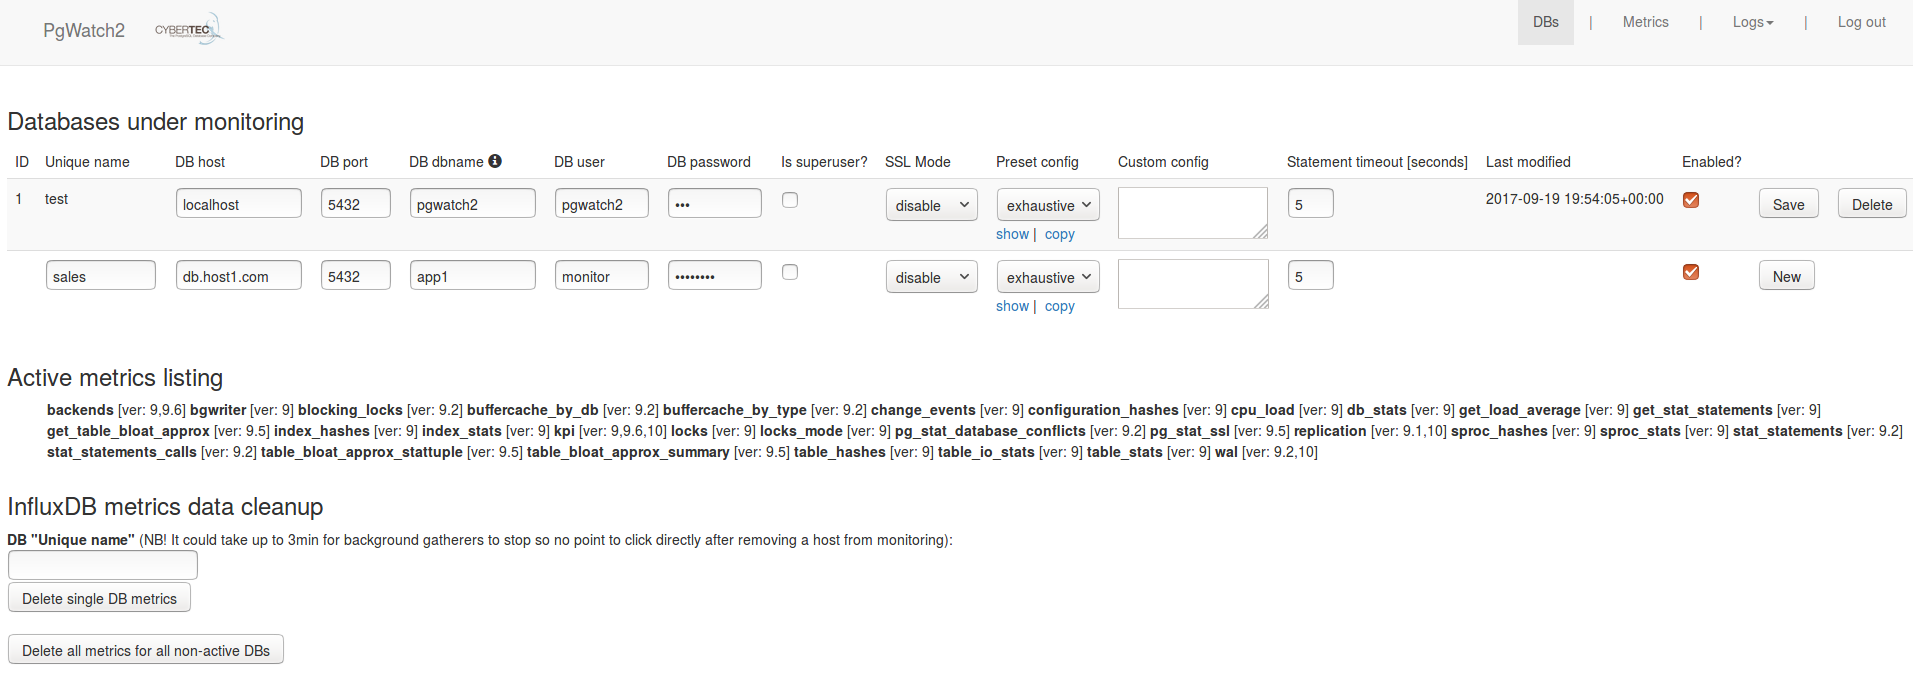 A sample screenshot of the pgwatch2 admin Web UI